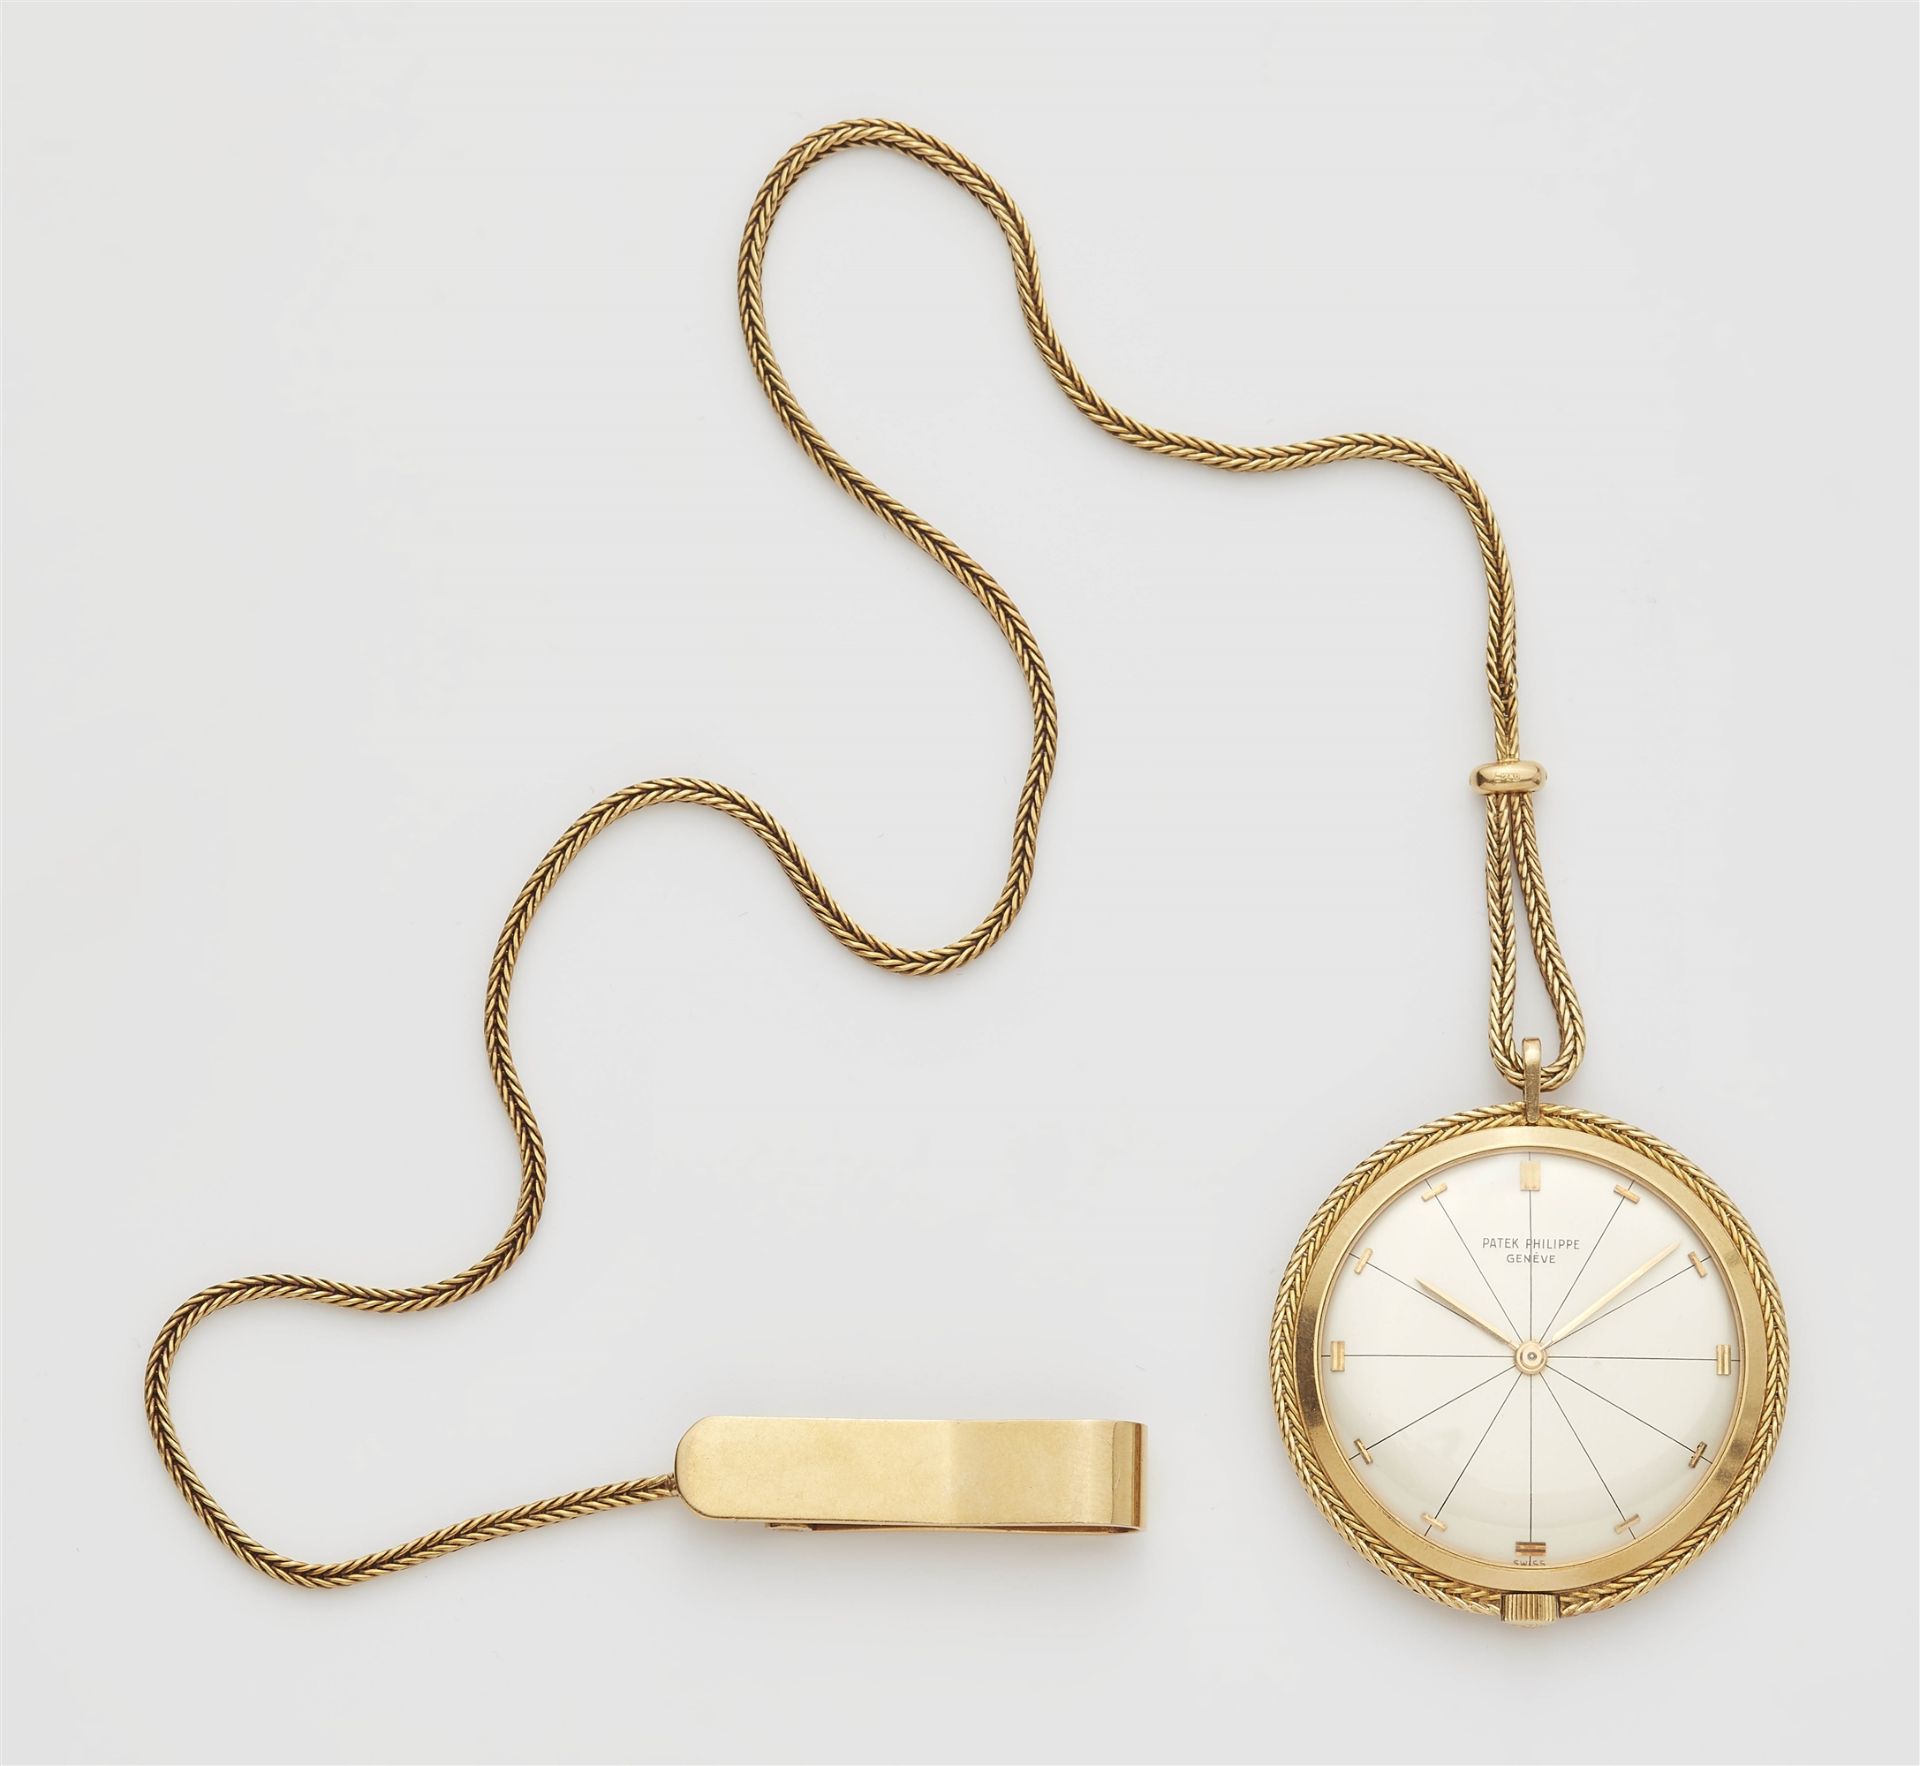 An 18k gold Patek Philippe Lepine pocket watch designed by Gilbert Albert.